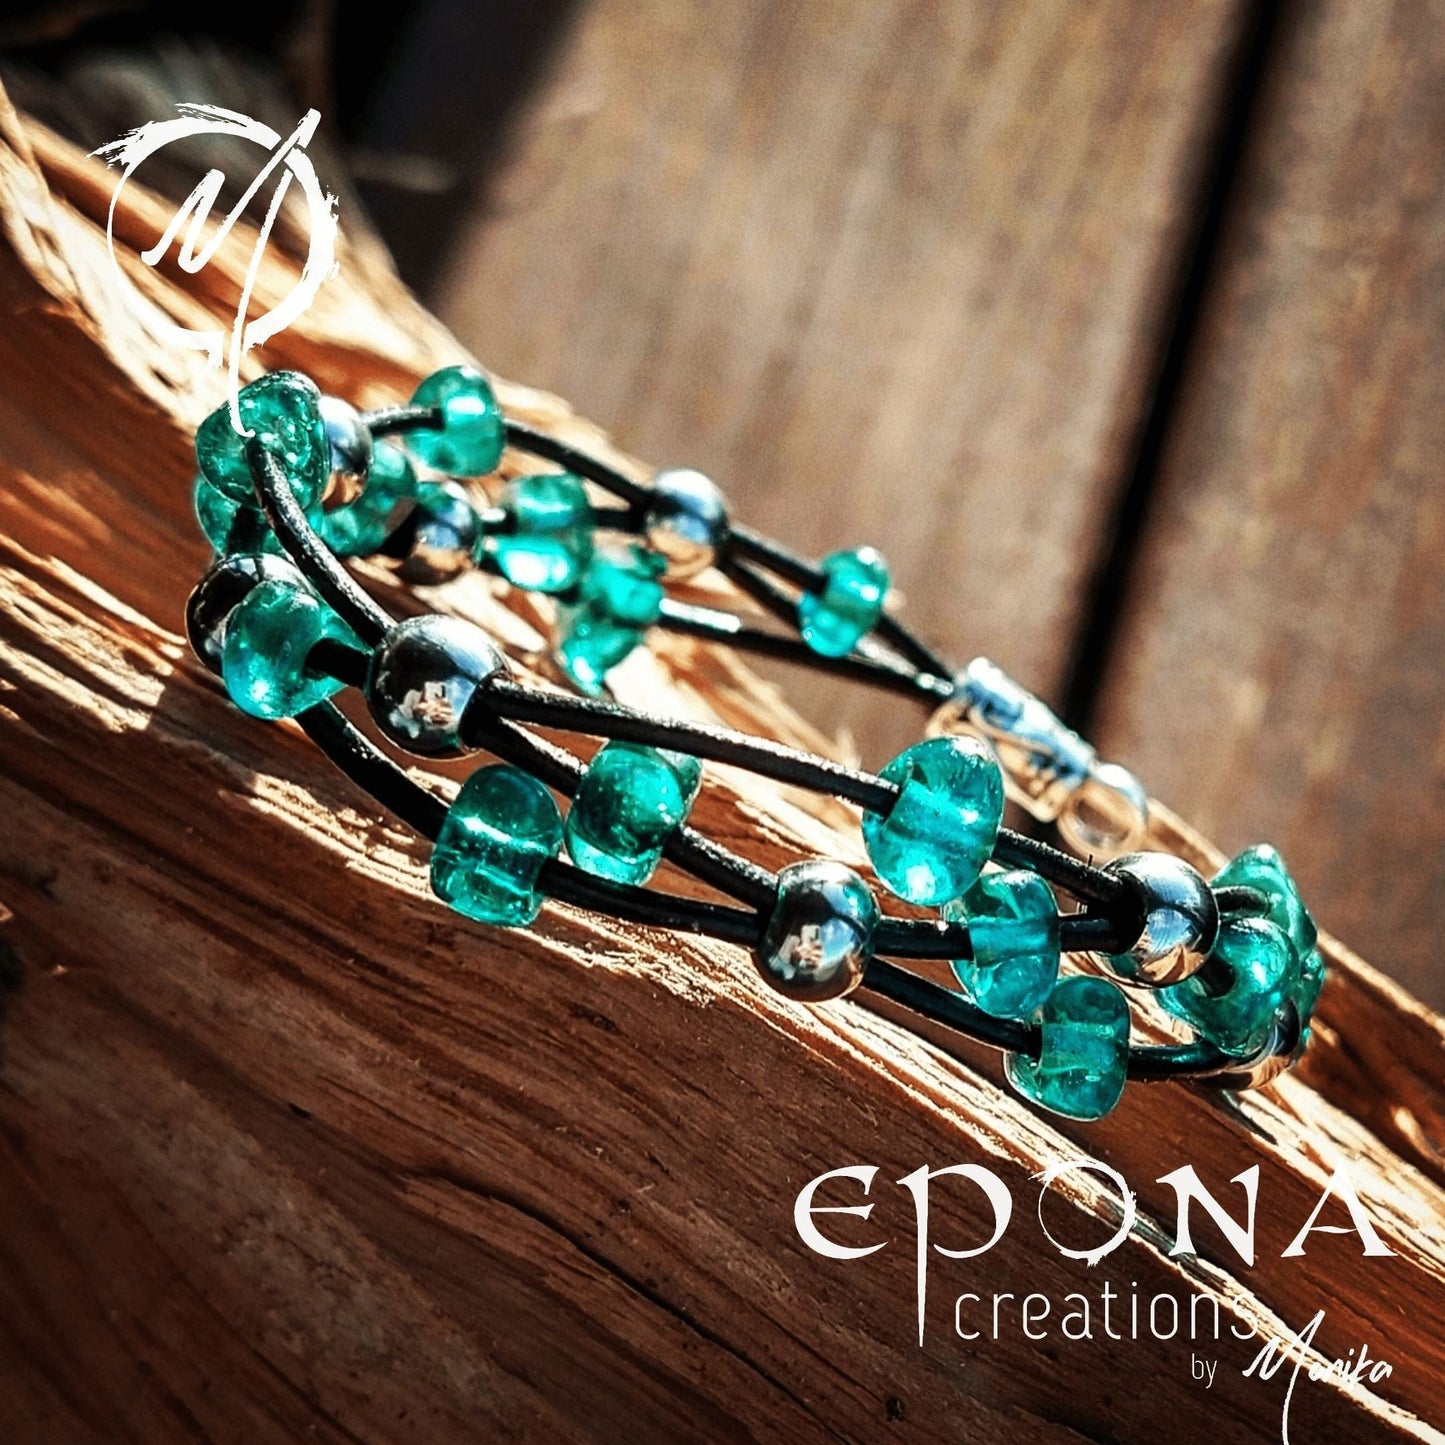 Epona Creations | by Monika - Jewellery and Design Teal Green glass beaded leather bracelet Custom jewellery Monika Australia horsehair keepsake